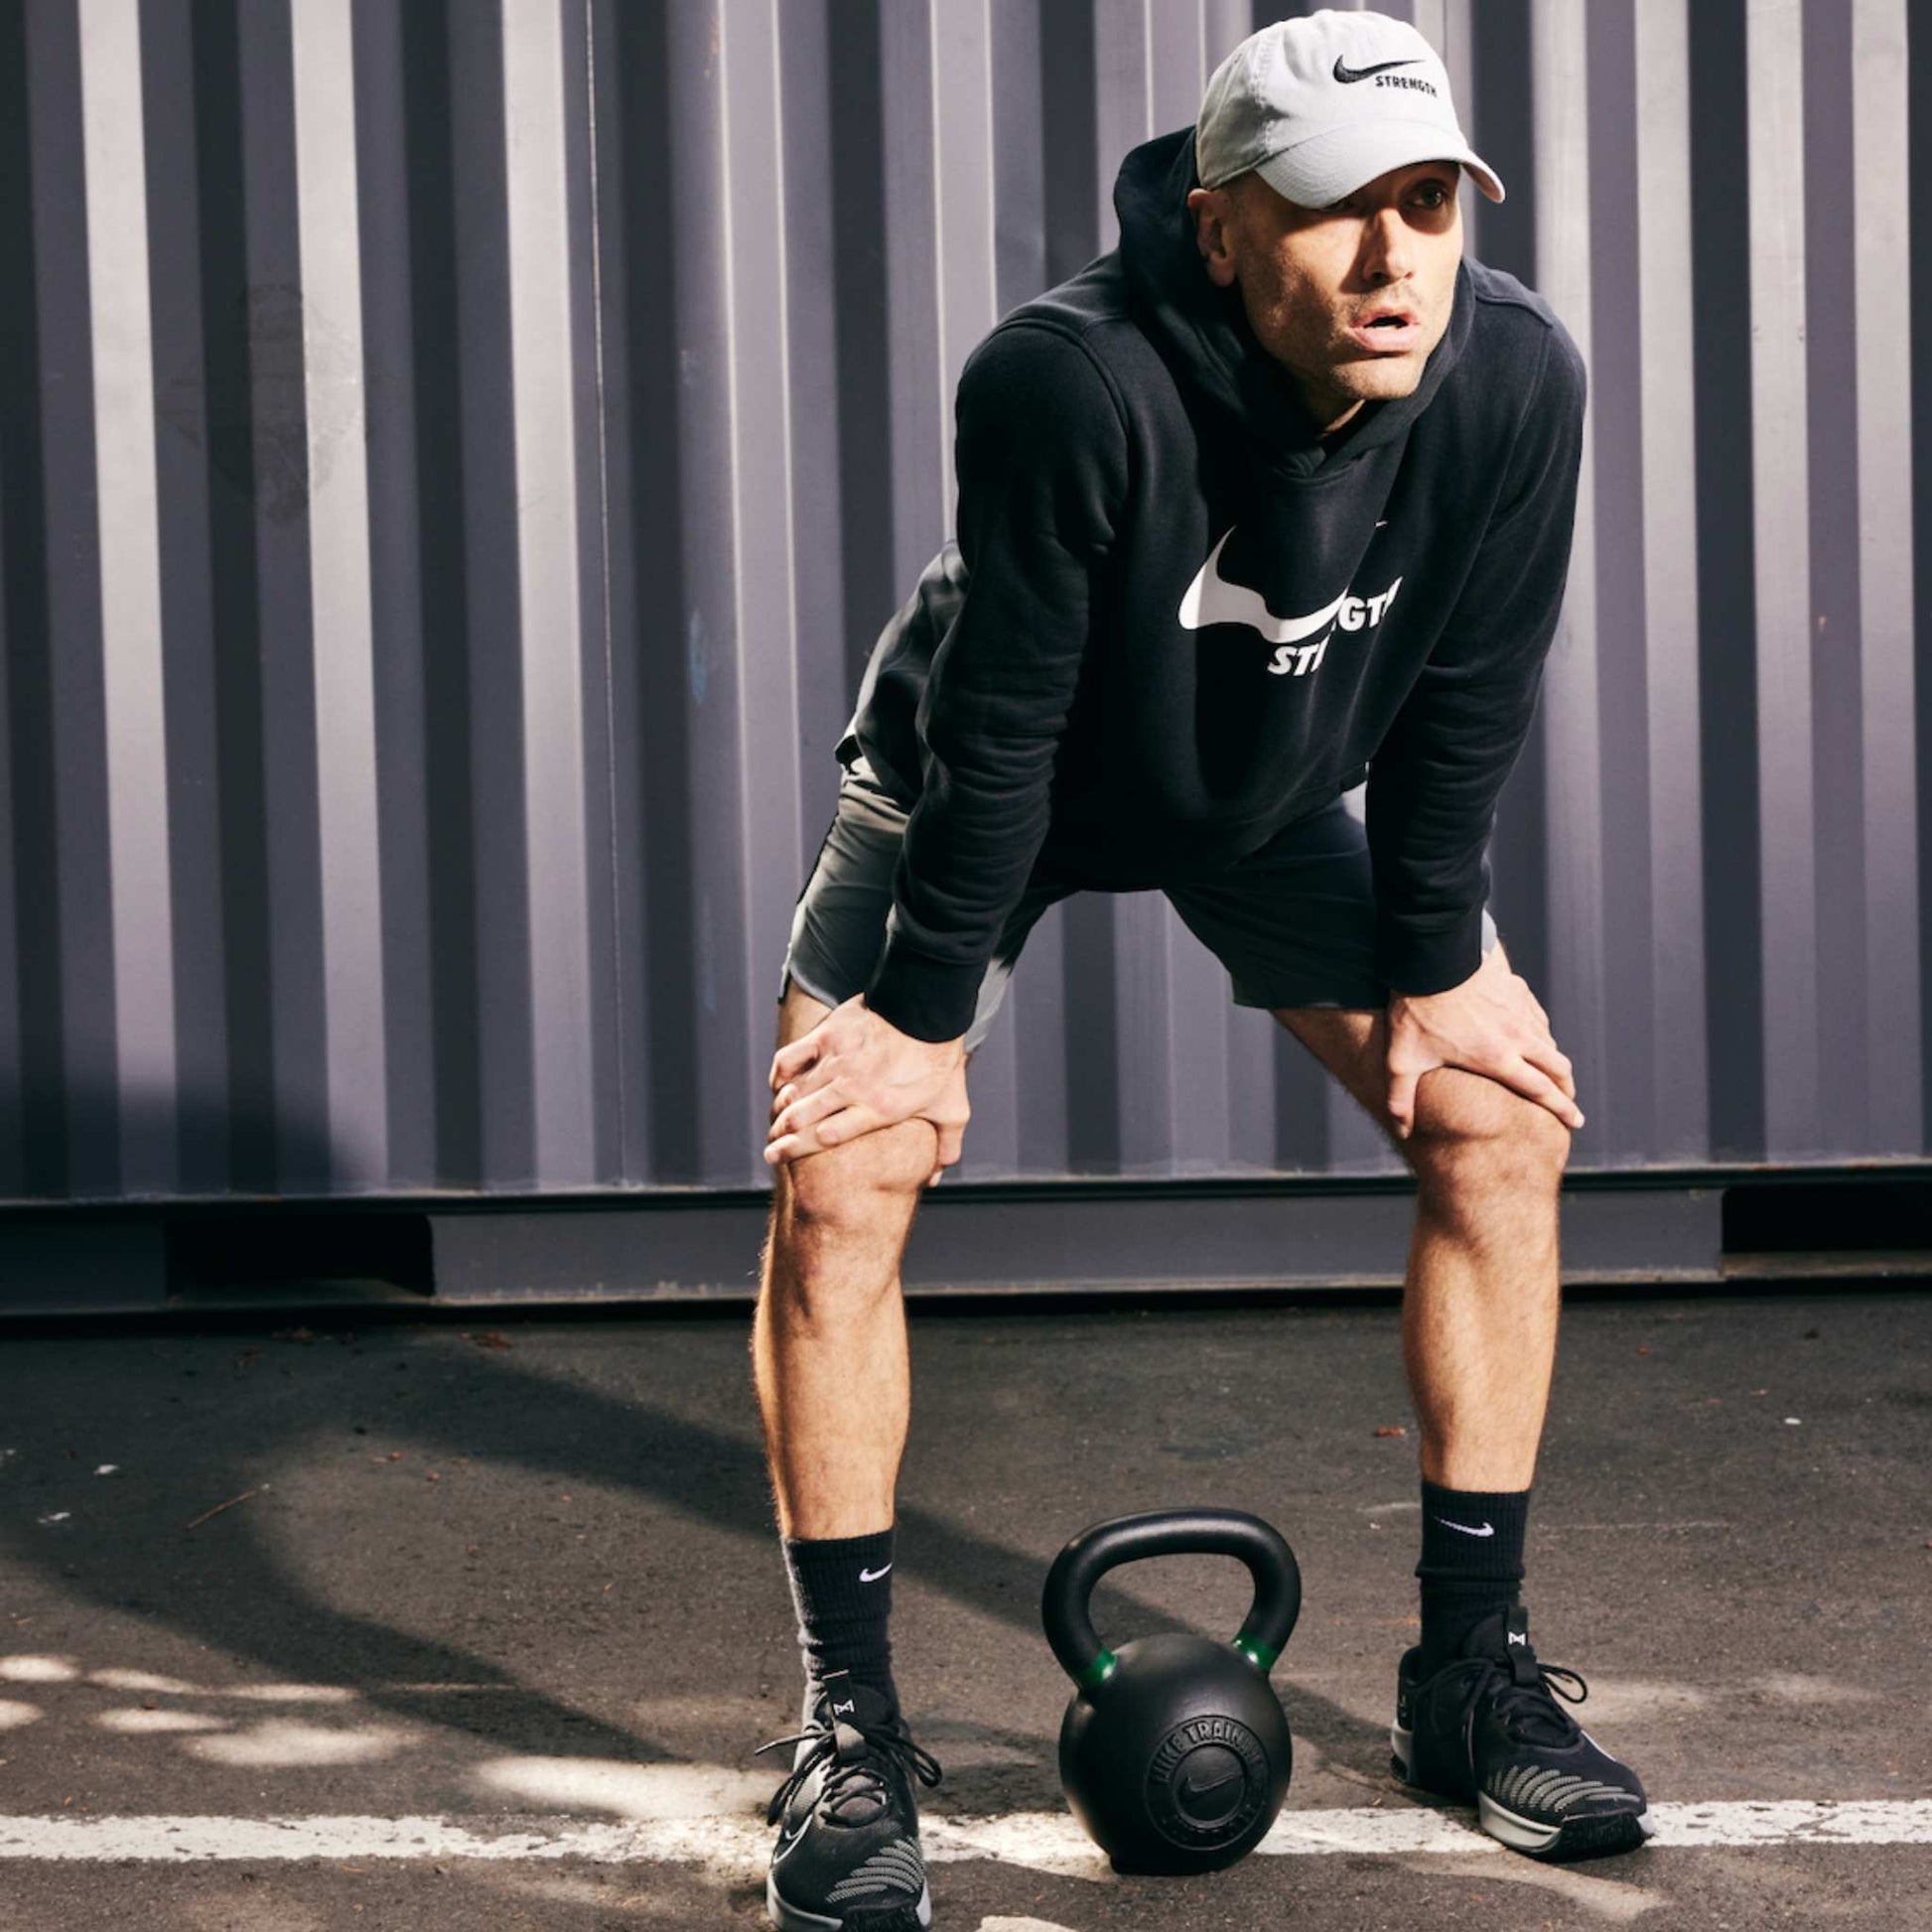 Kettlebell Essentials Bundle – Nike Strength